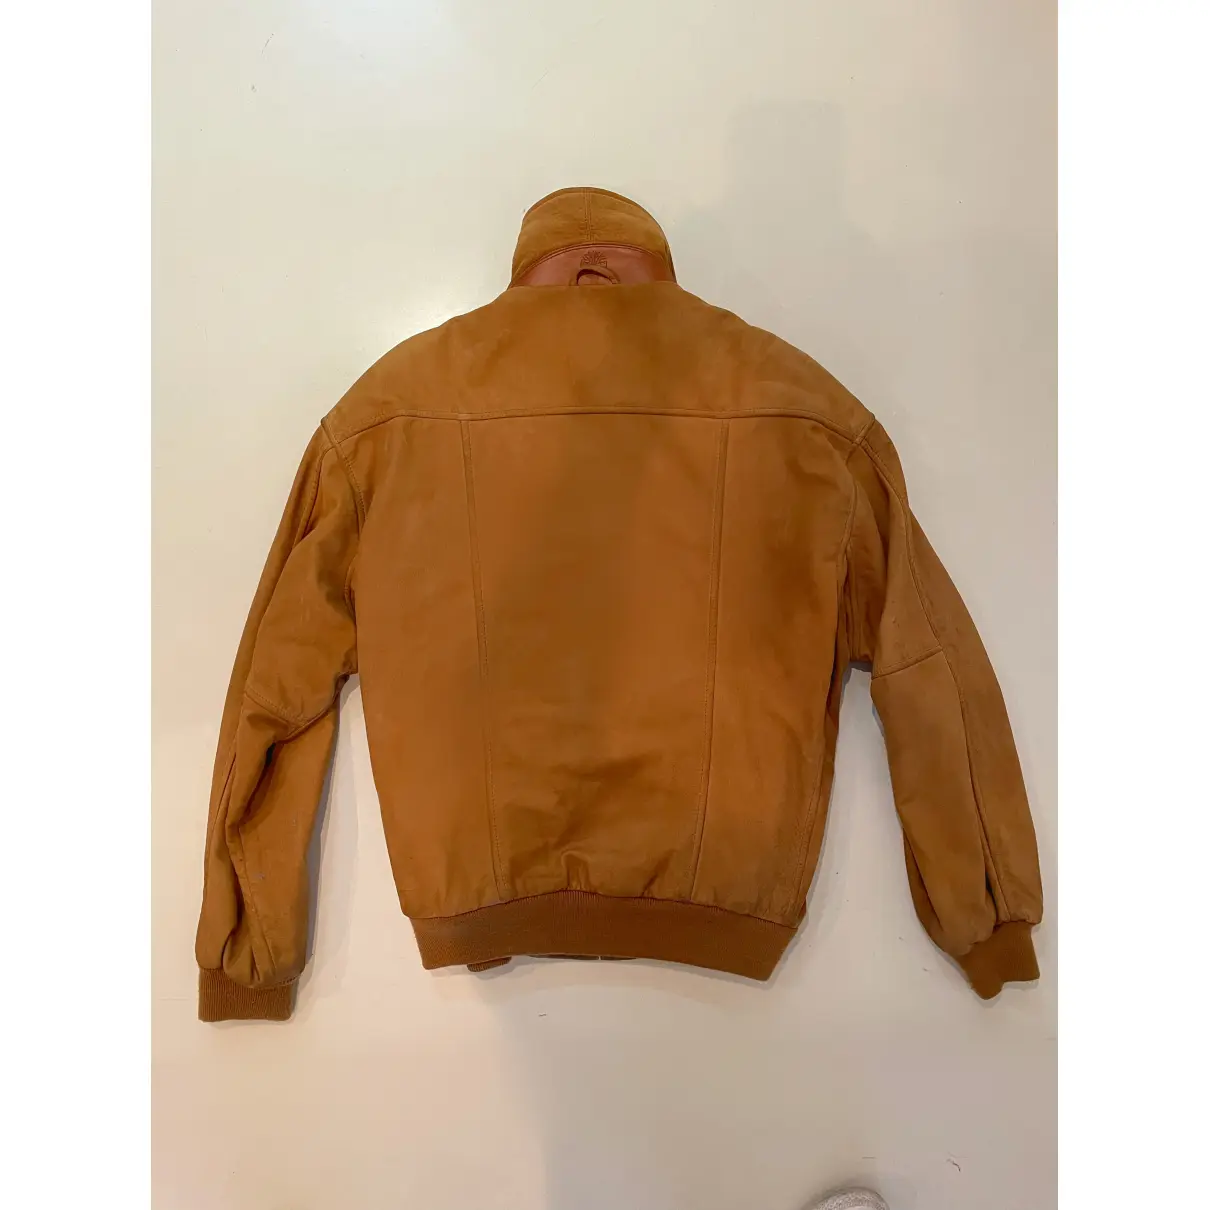 Buy Timberland Leather jacket online